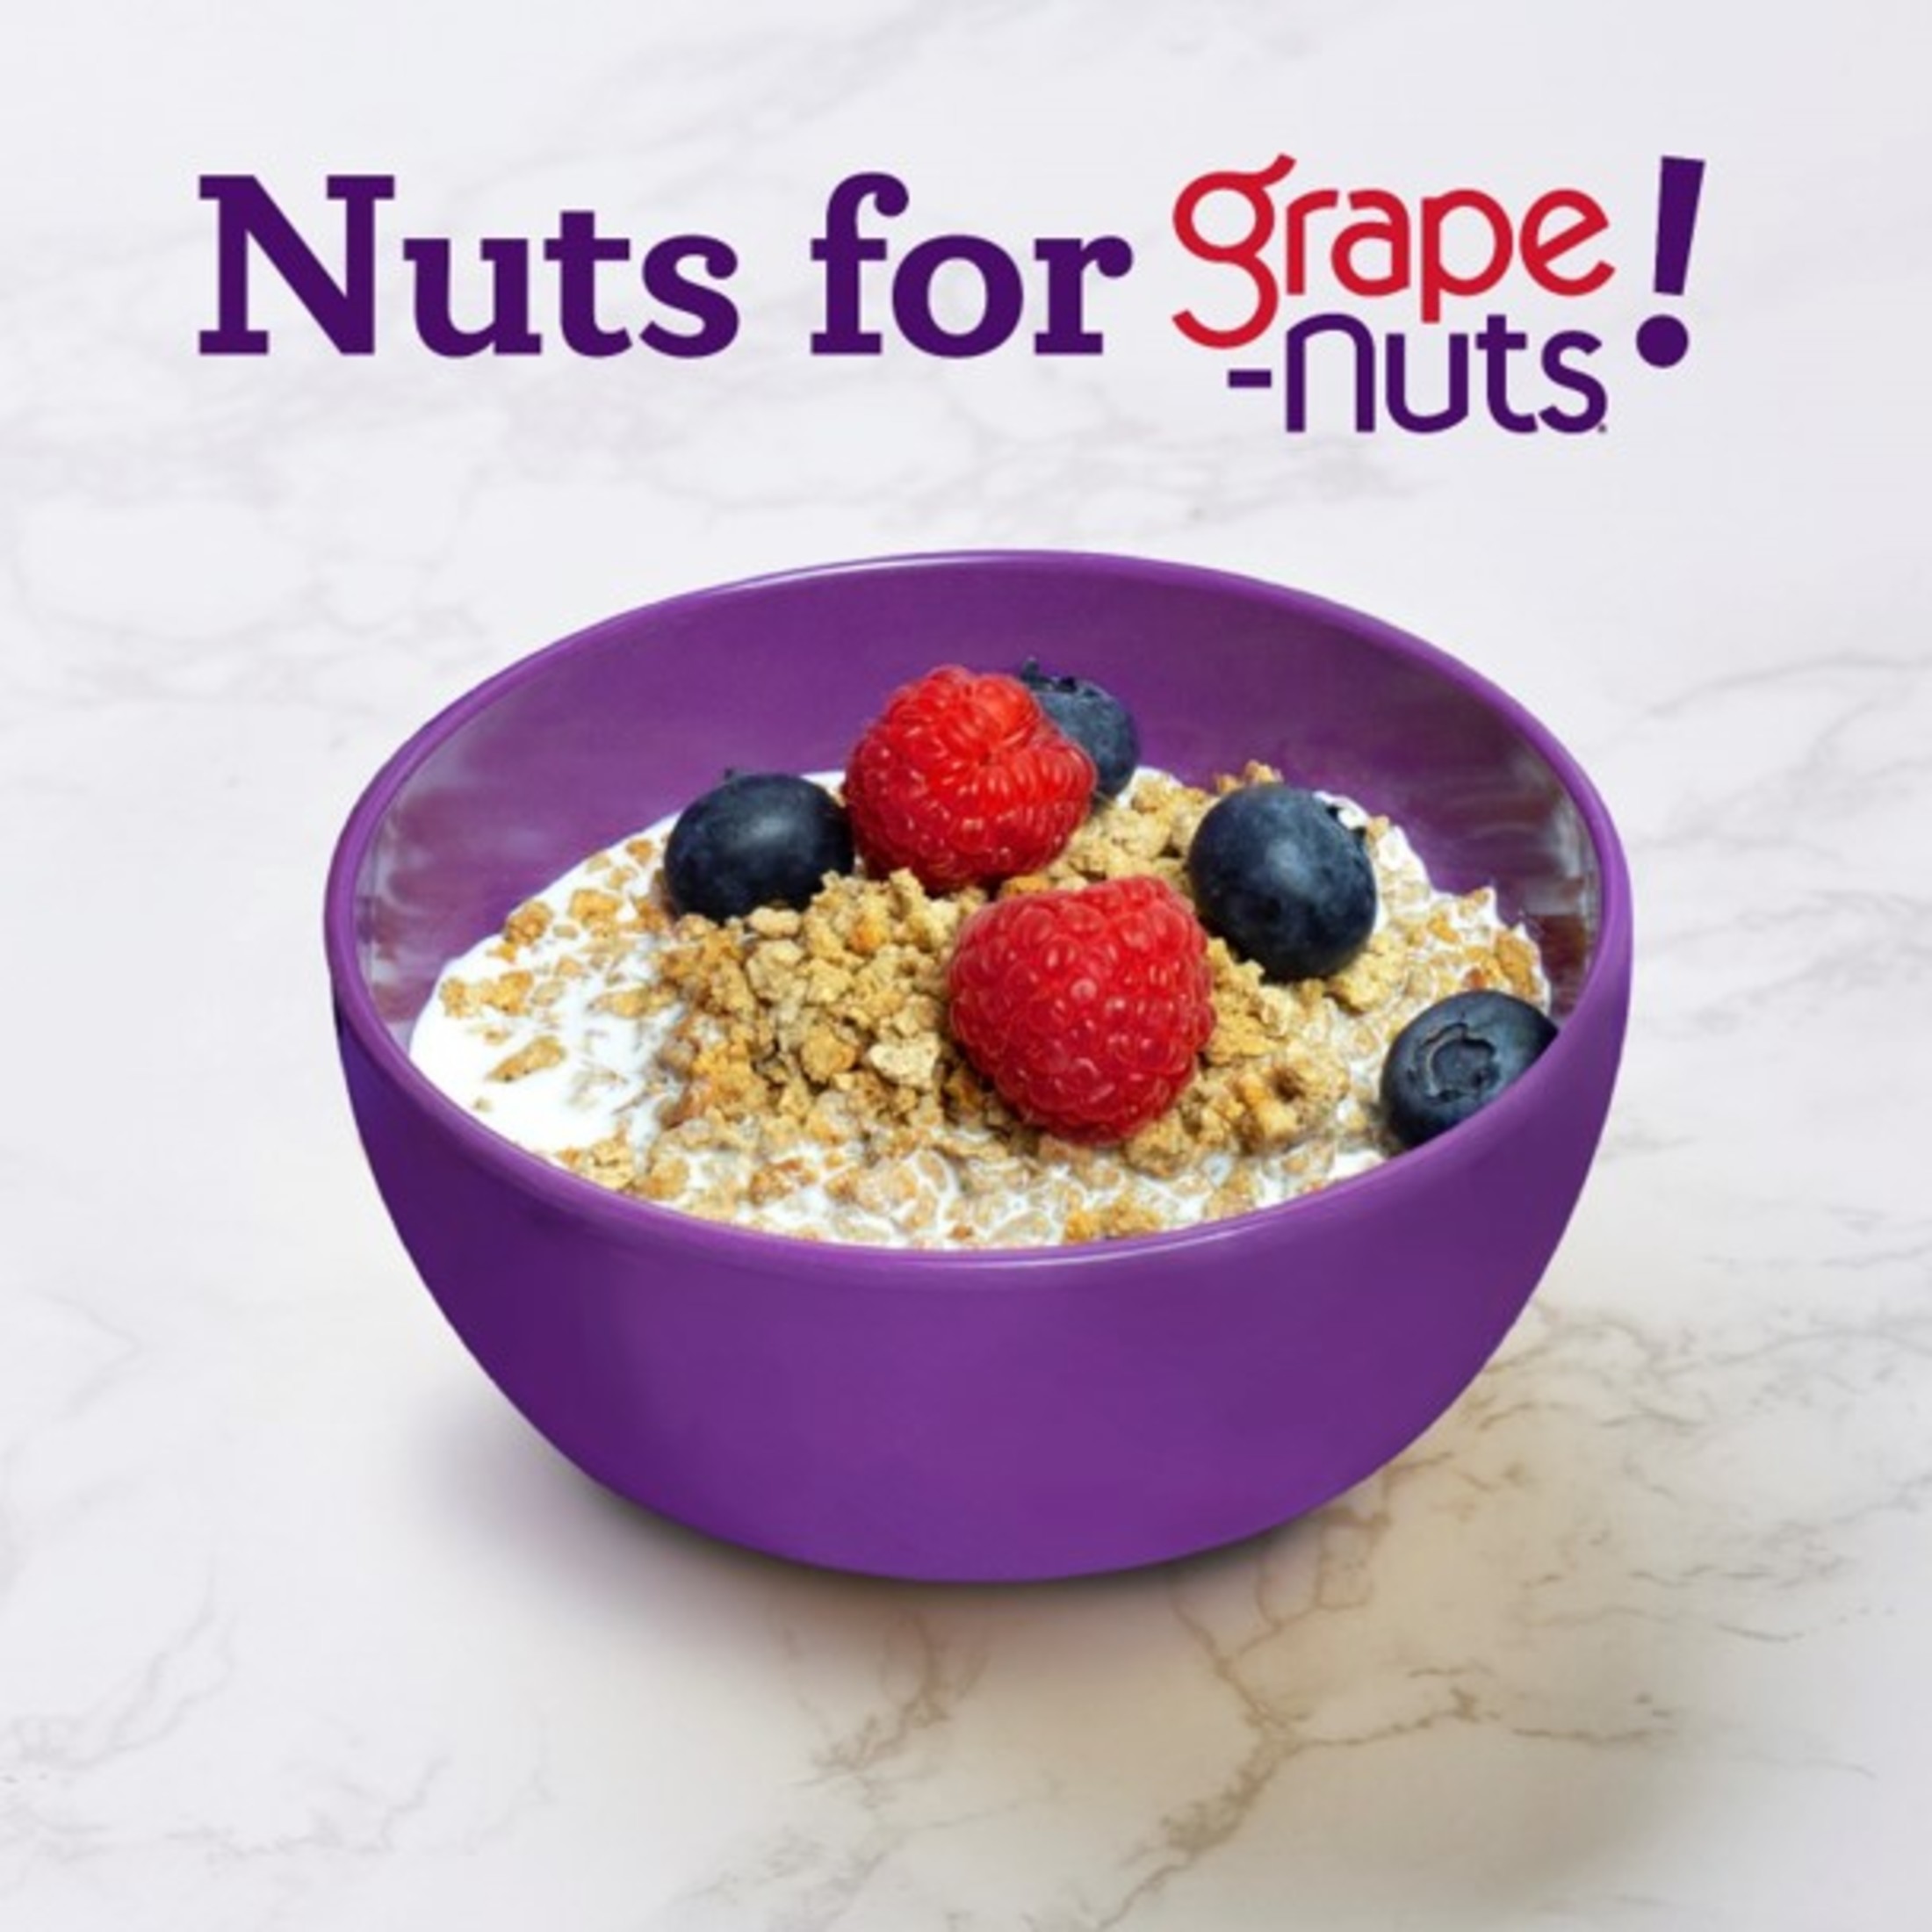 Post Grape Nuts Original Breakfast Cereal, 29 oz Box - image 4 of 5